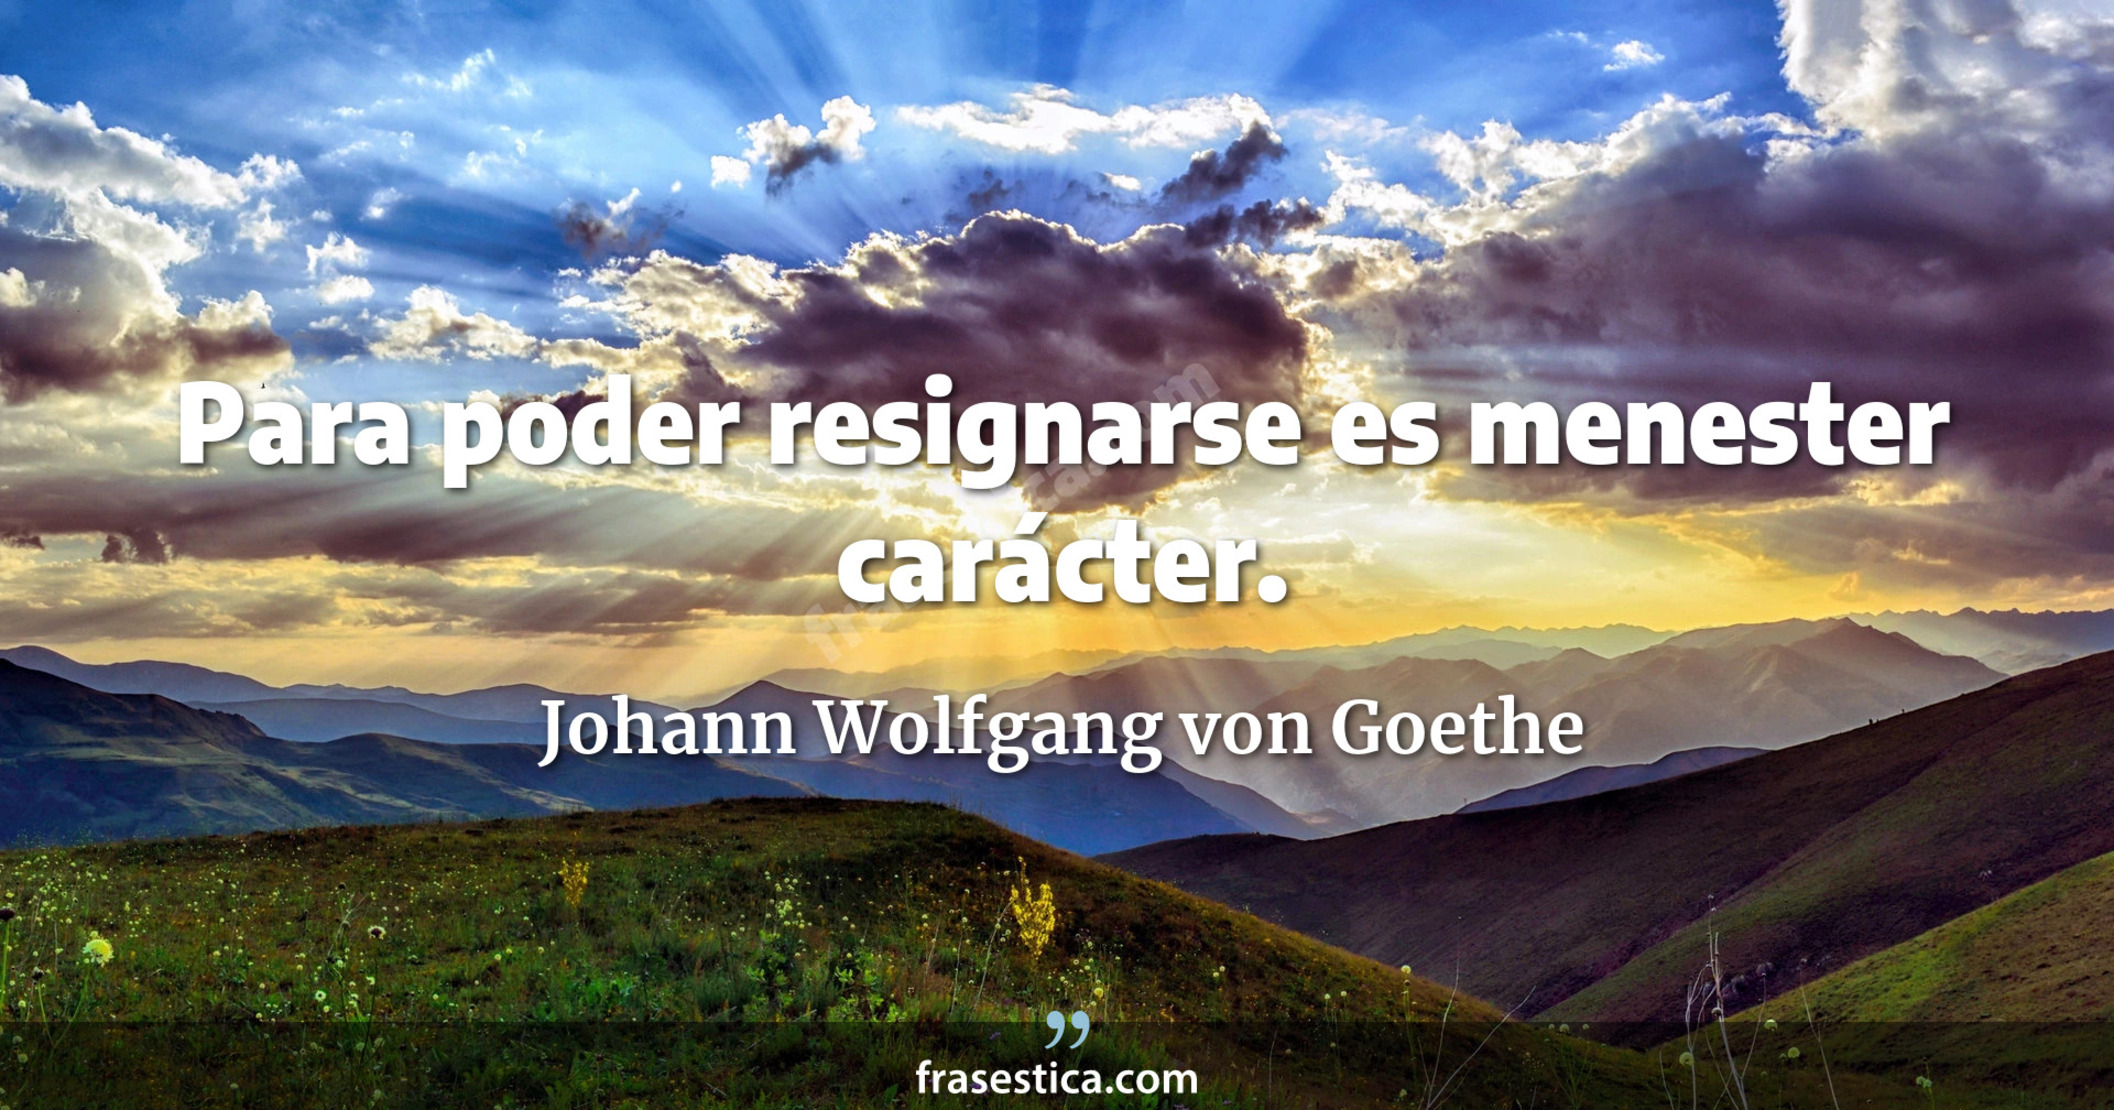 Para poder resignarse es menester carácter. - Johann Wolfgang von Goethe